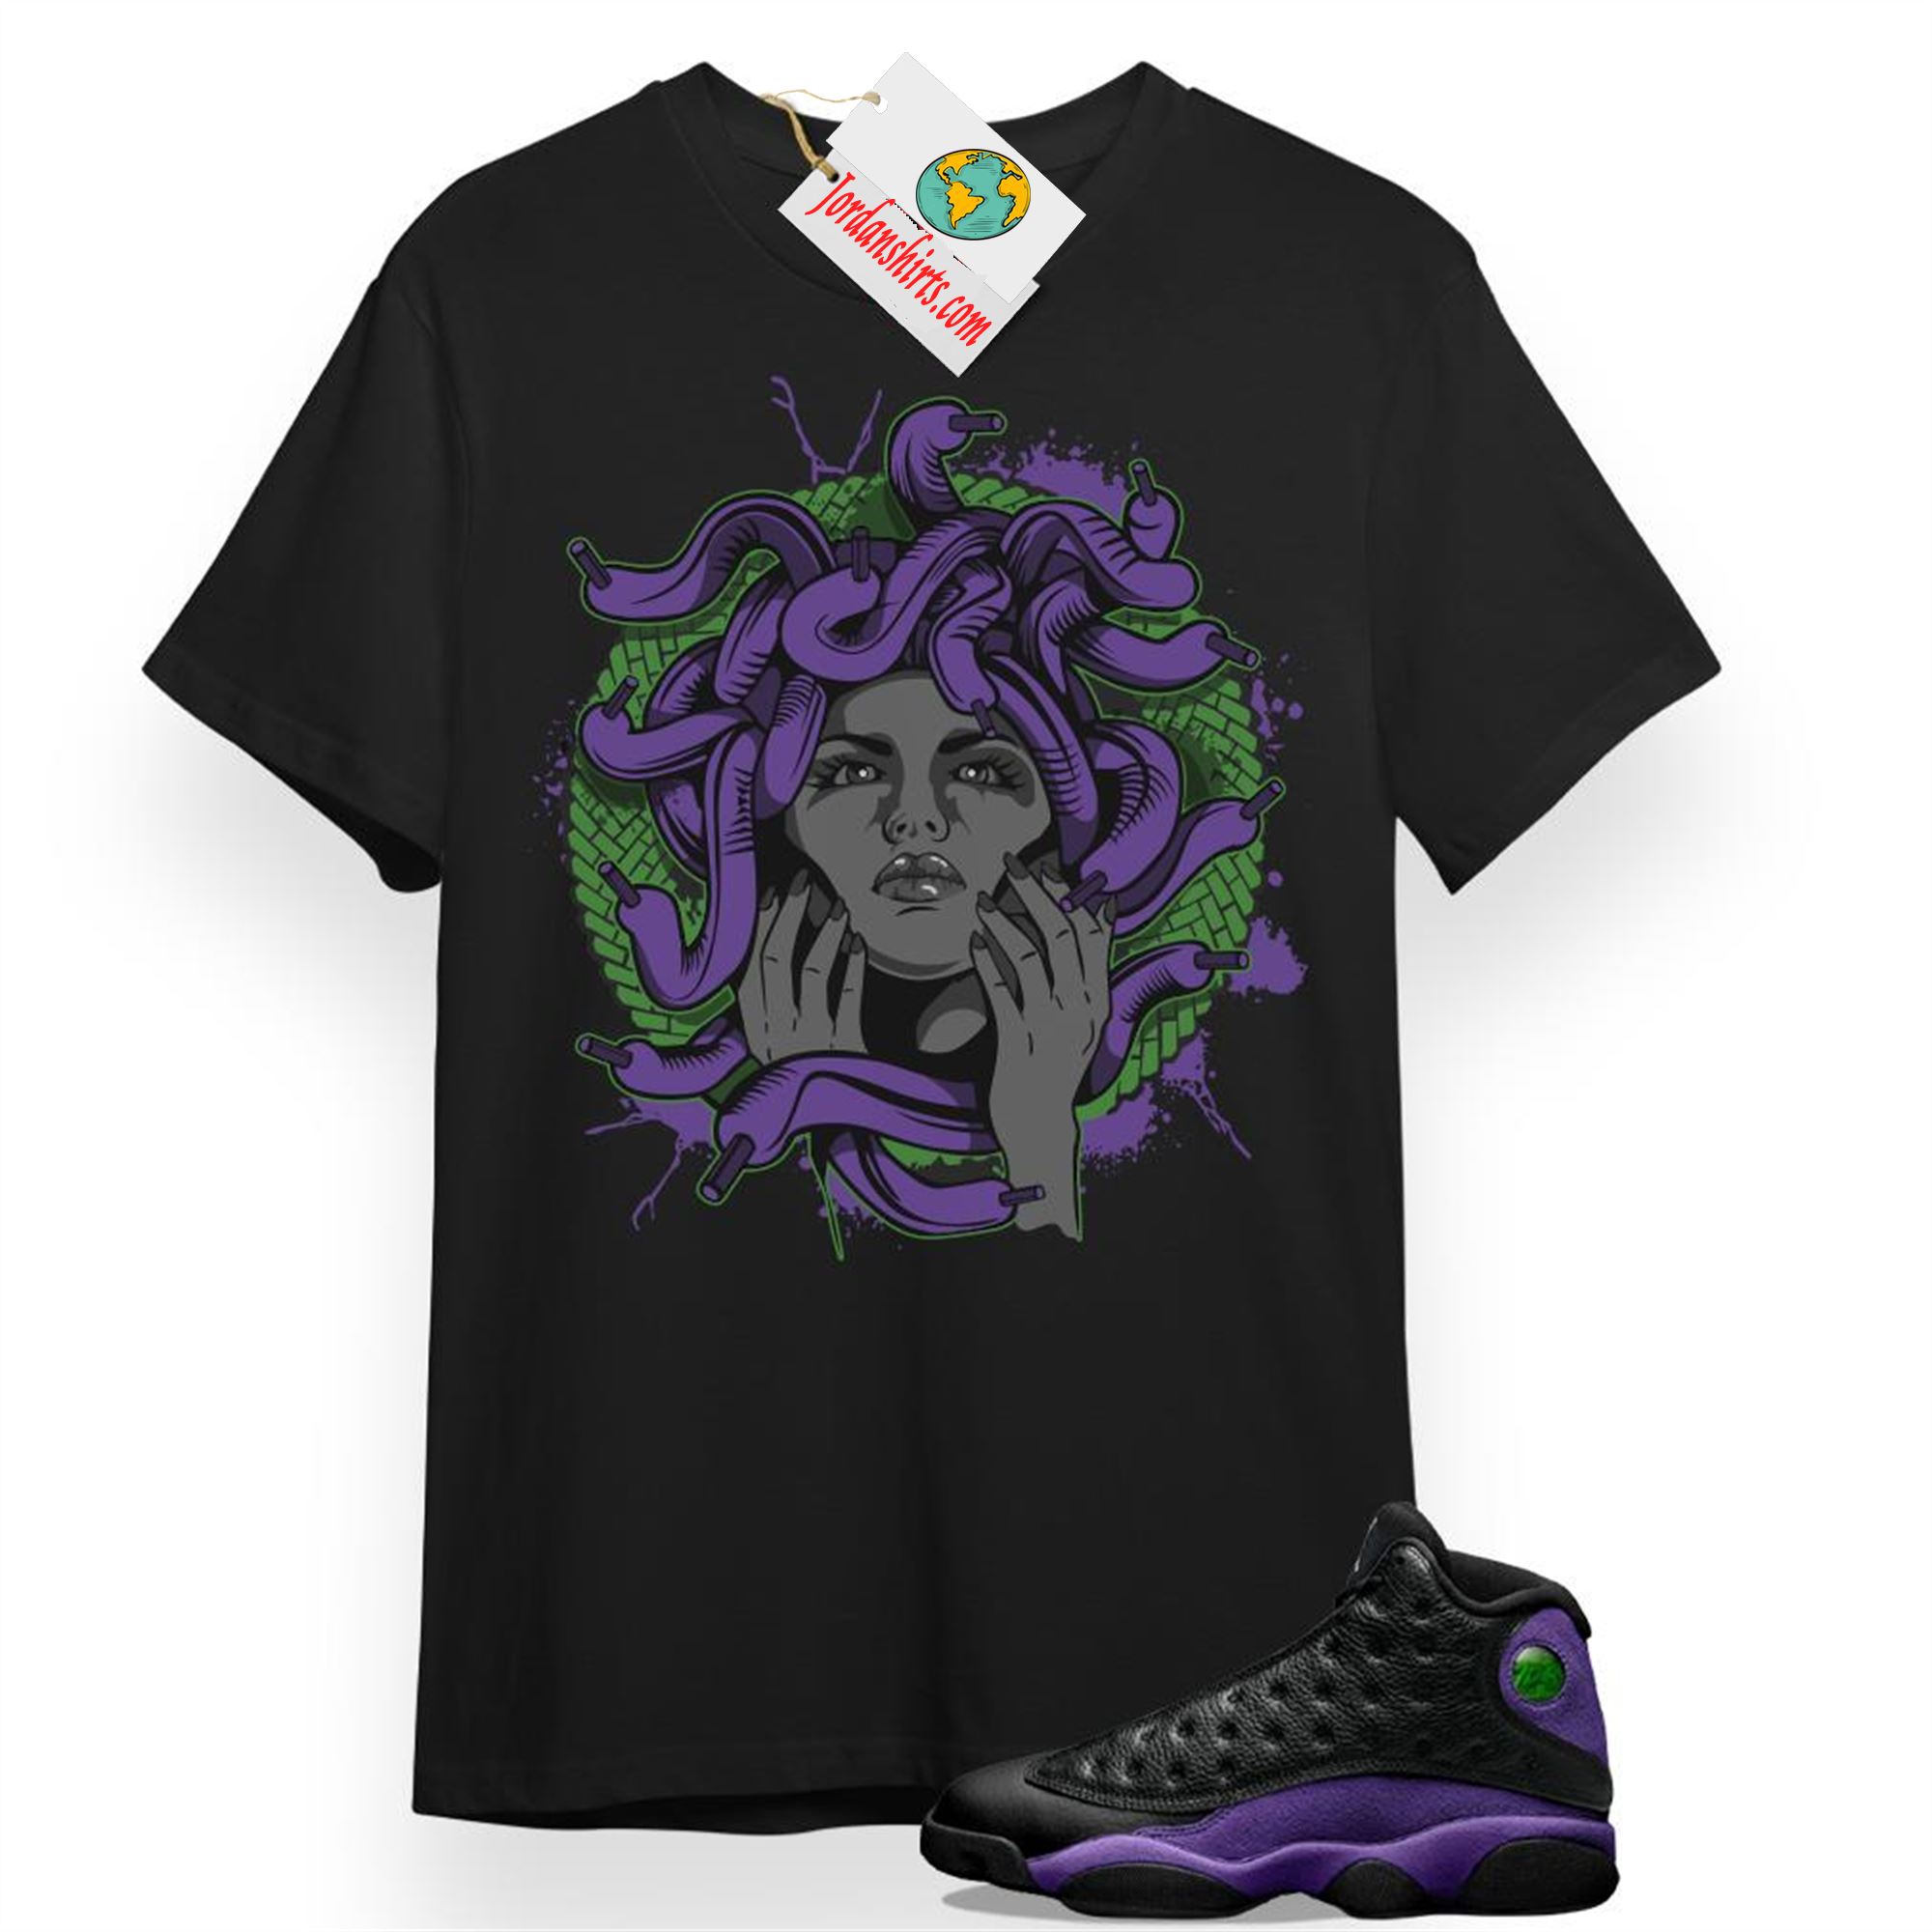 Jordan 13 Shirt, Medusa Black T-shirt Air Jordan 13 Court Purple 13s Plus Size Up To 5xl